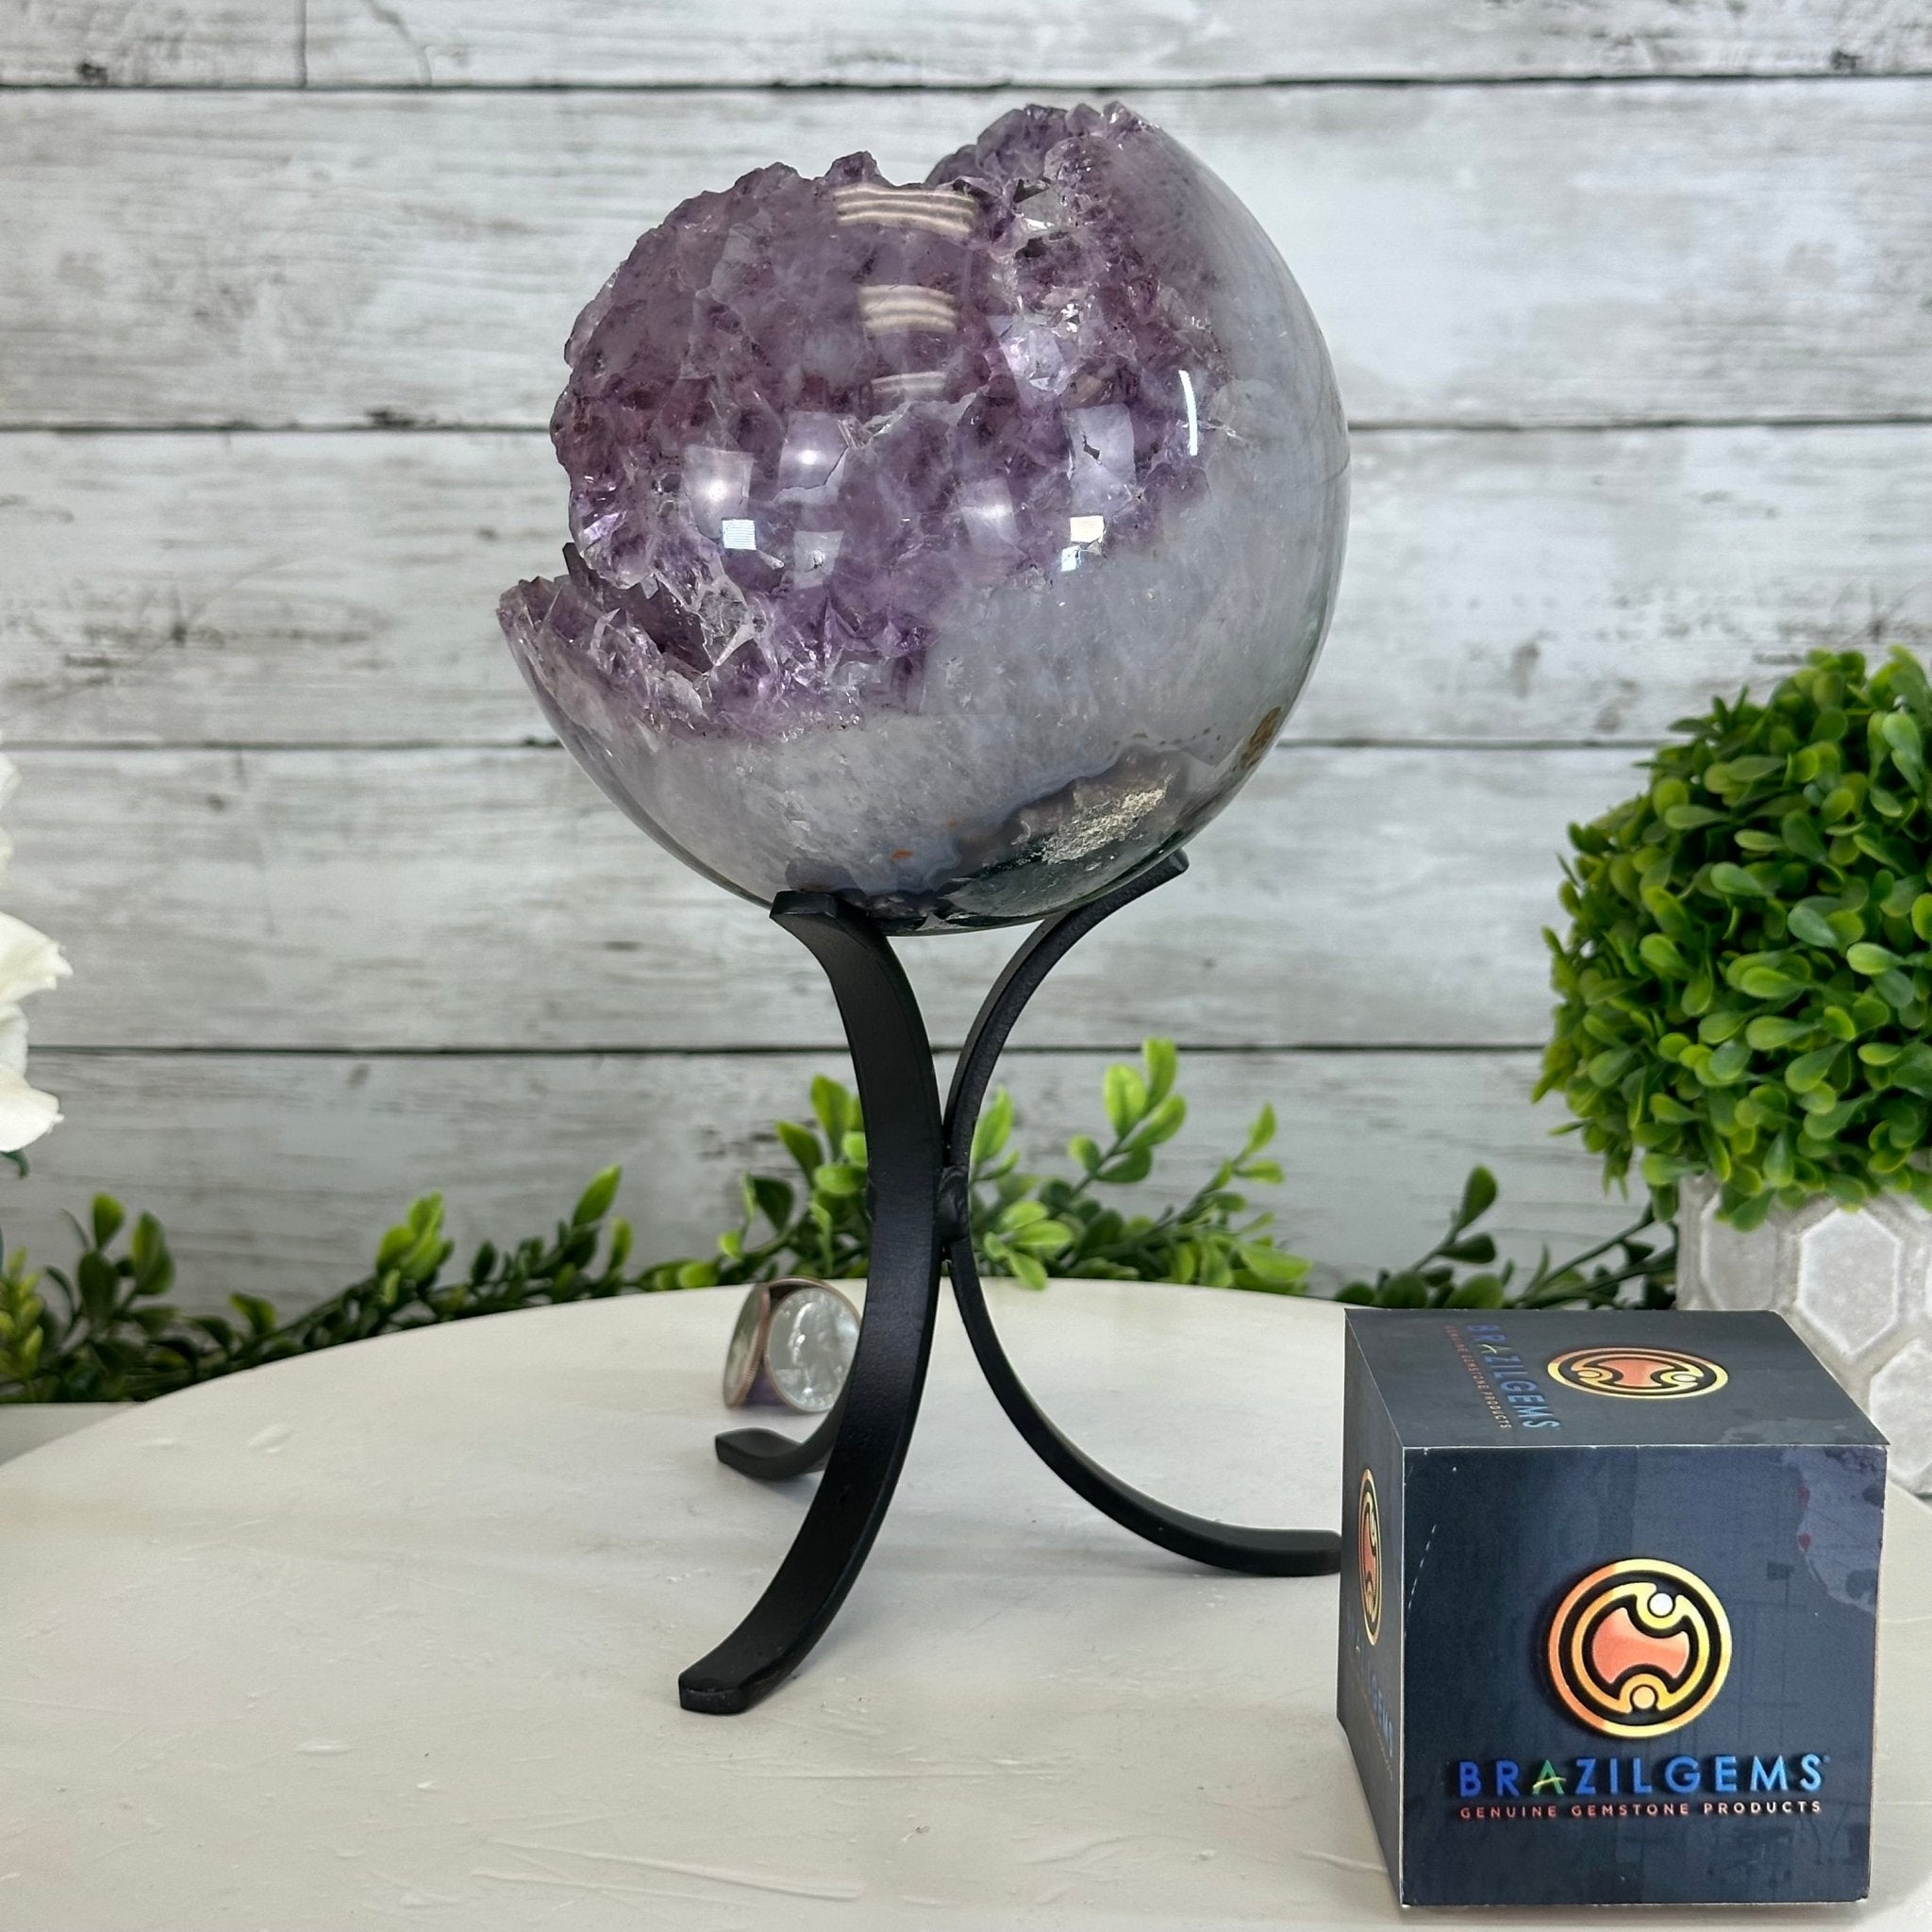 Druzy Amethyst Sphere on a Metal Stand, 5.6 lbs & 9.9" Tall #5630-0066 - Brazil GemsBrazil GemsDruzy Amethyst Sphere on a Metal Stand, 5.6 lbs & 9.9" Tall #5630-0066Spheres5630-0066